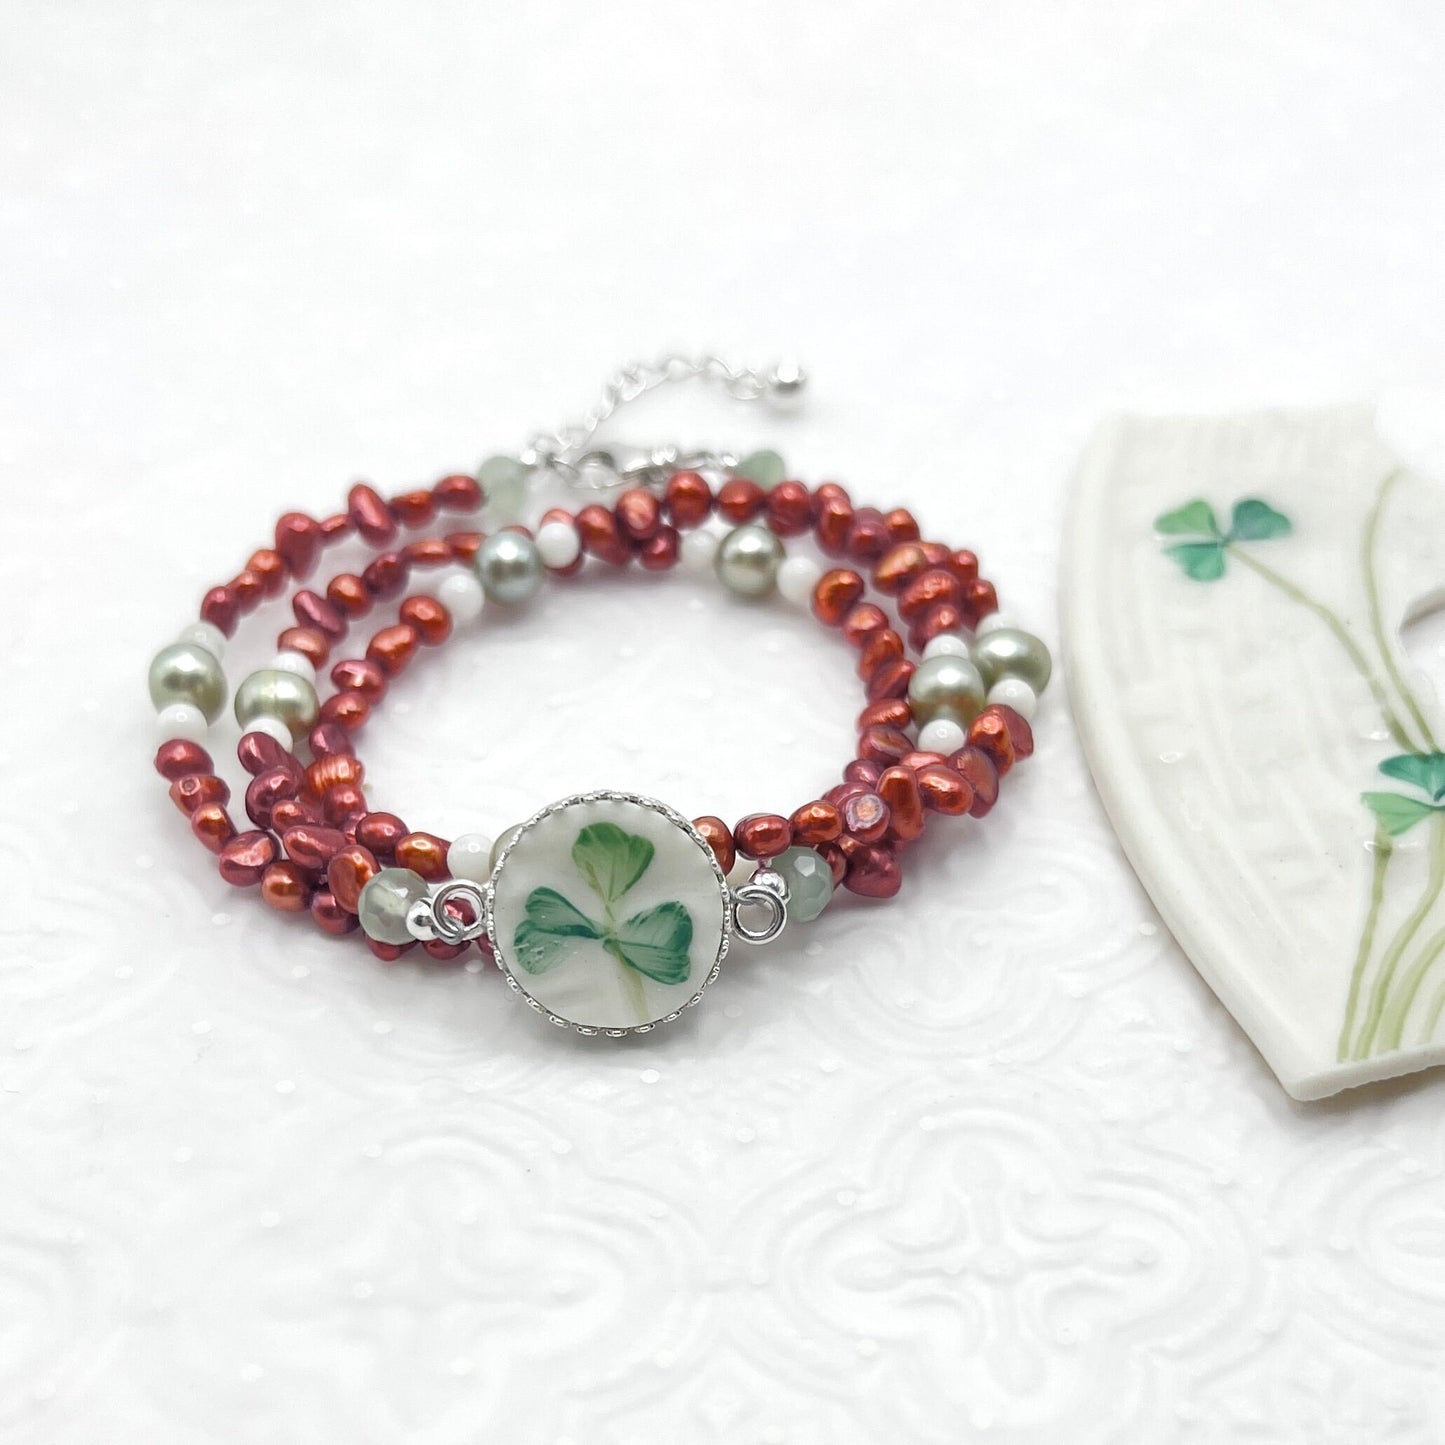 Irish Statement Jewelry, Belleek Broken China Jewelry, Boho Beaded Wrap Bracelet, Celtic Gifts for Women